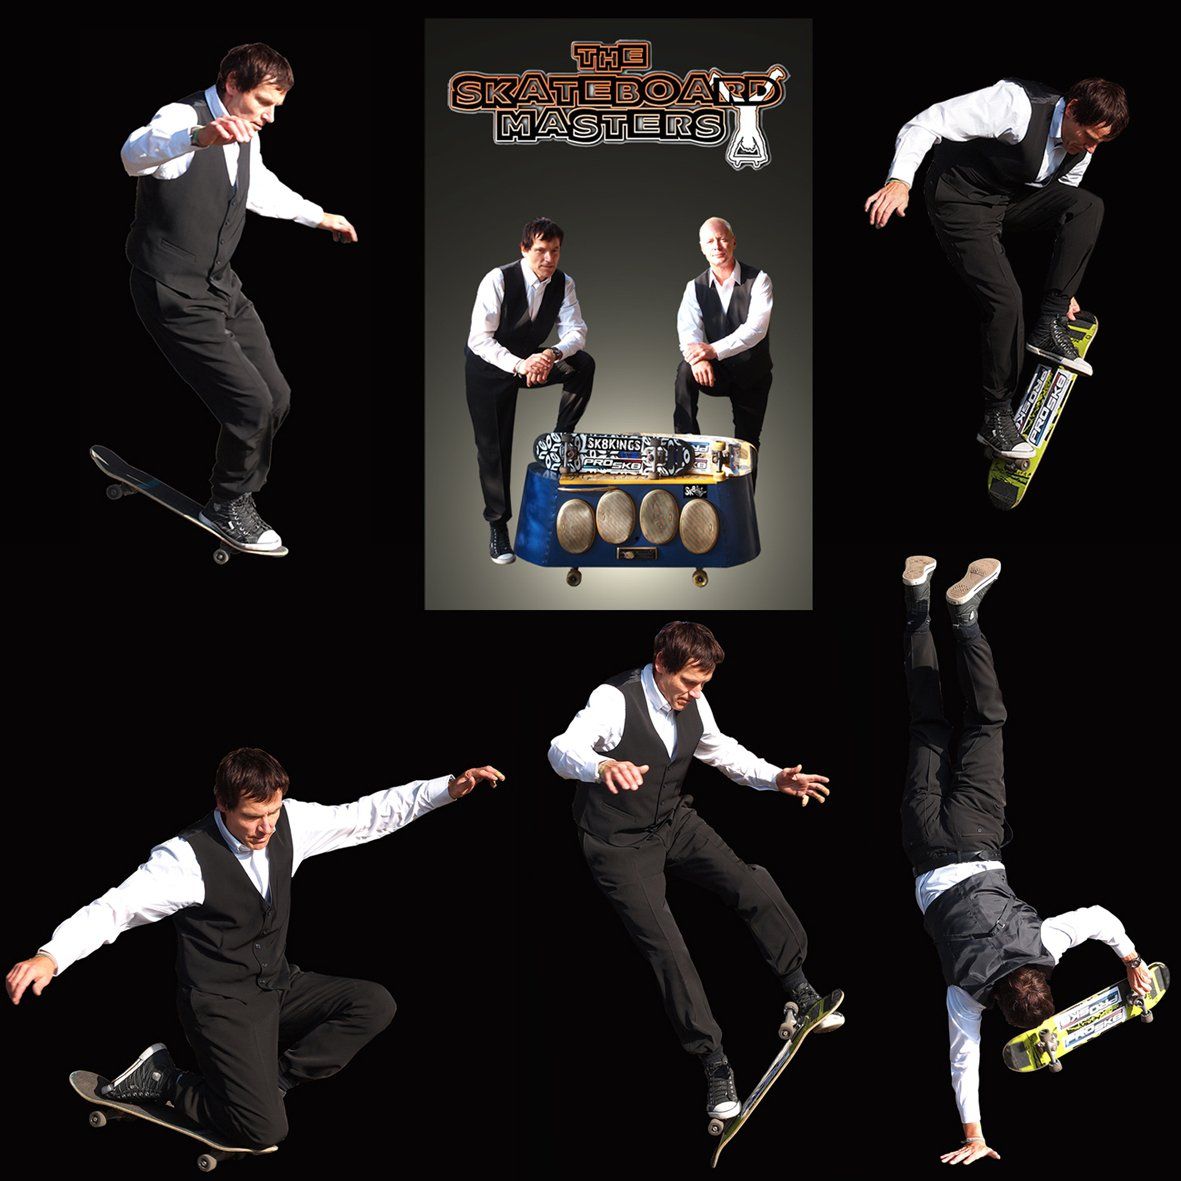 Guenter Mokulys / Die Skateboard Masters